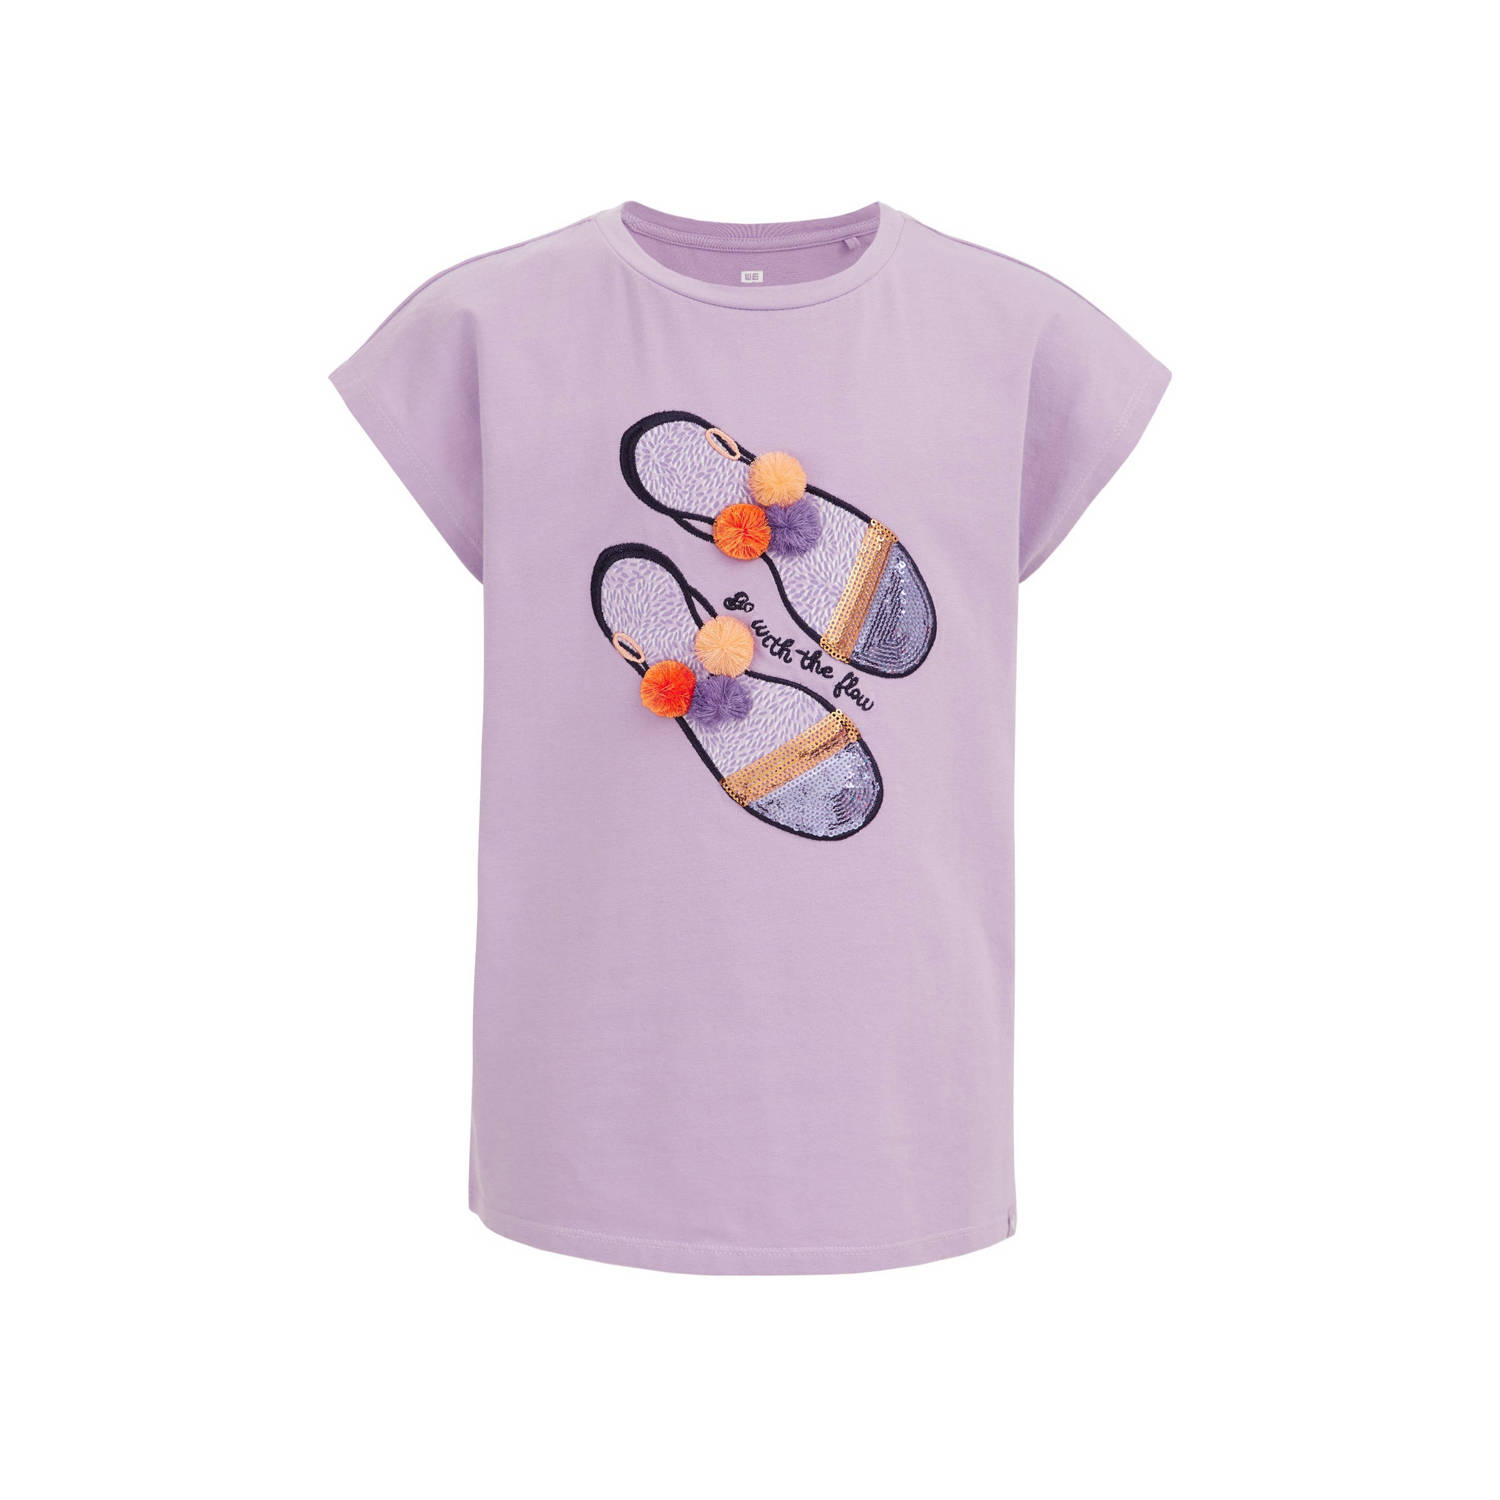 WE Fashion T-shirt met printopdruk paars Meisjes Stretchkatoen Ronde hals 110 116